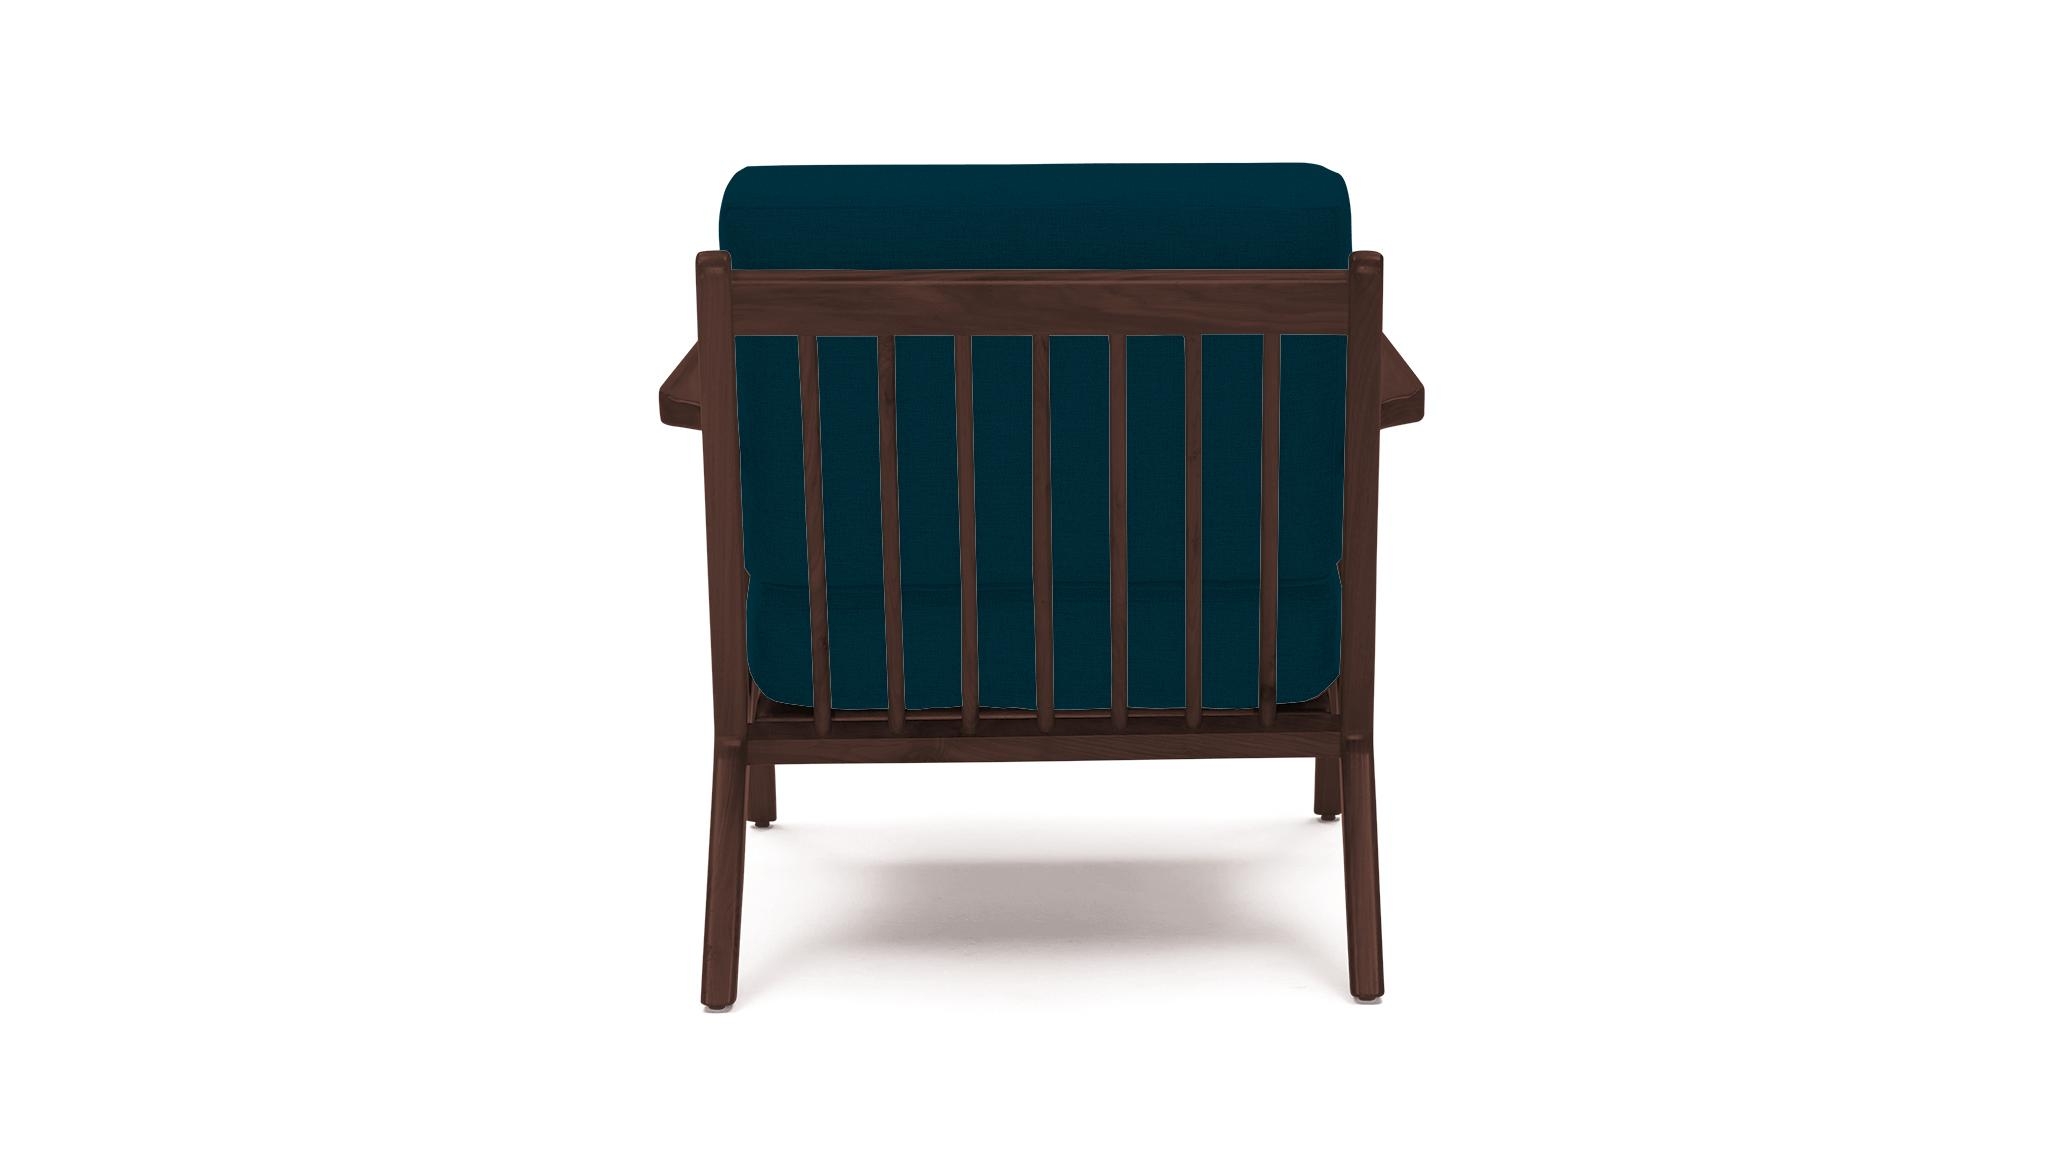 Blue Soto Mid Century Modern Concave Arm Chair - Key Largo Zenith Teal - Walnut - Image 4